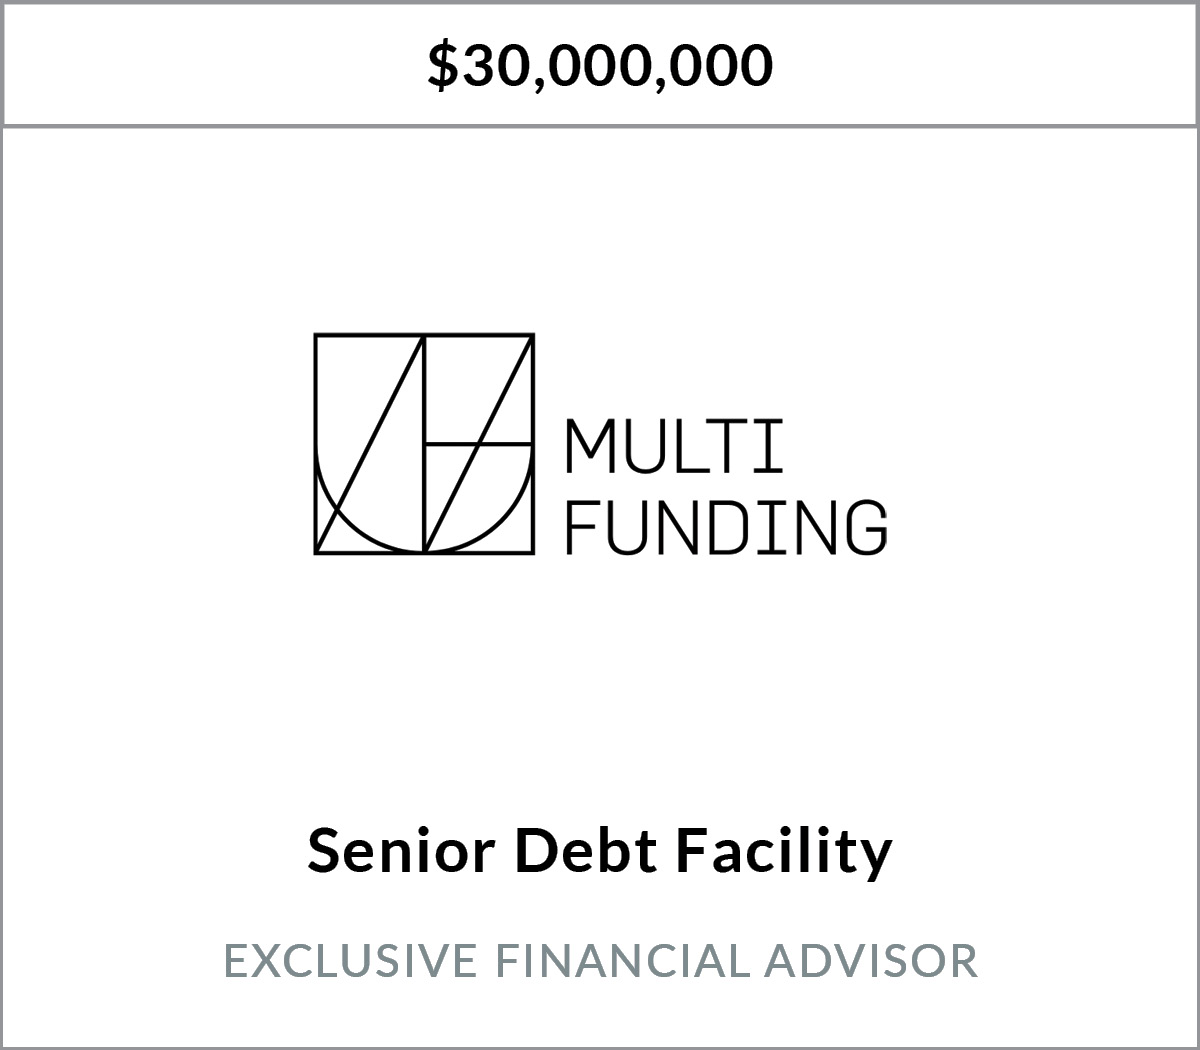 Bryant Park Capital & Multi Funding, Inc Secure a $30 Million Senior Debt Facility